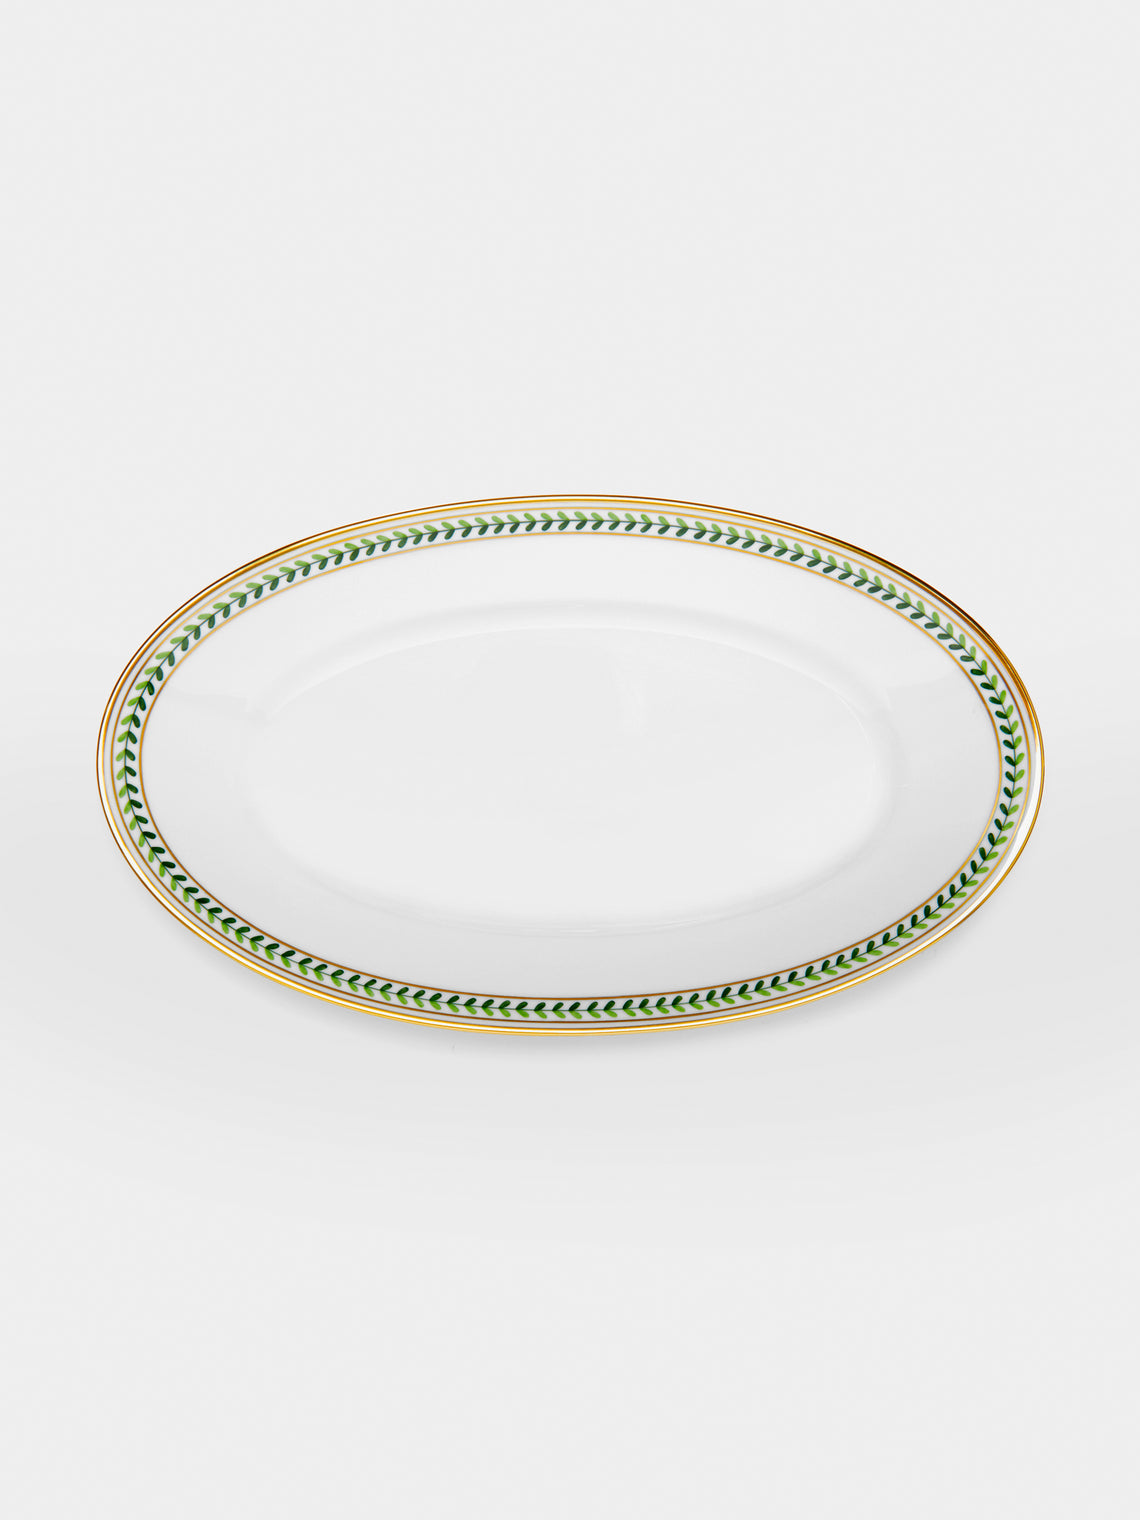 Augarten - Leafed Edge Hand-Painted Porcelain Serving Platter - White - ABASK - 